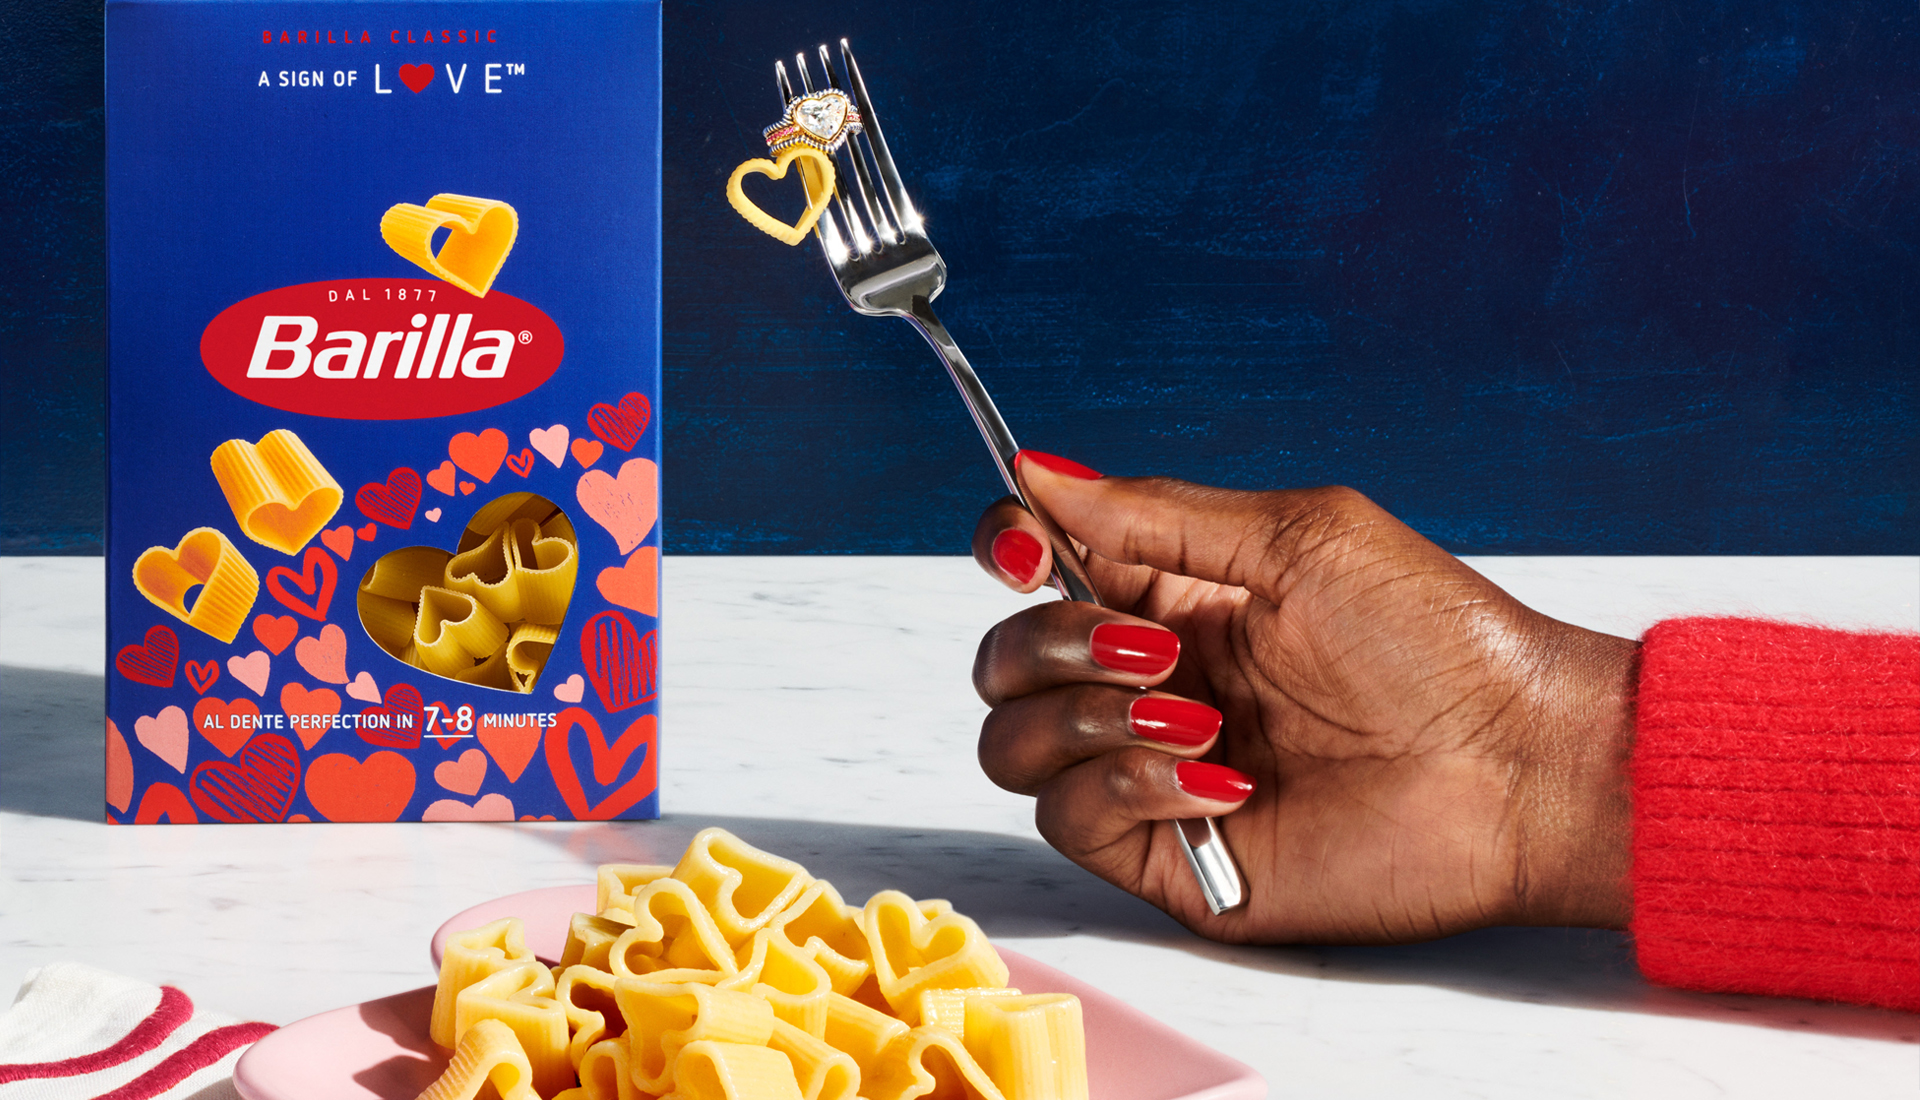 Barilla Love box and hand holding fork